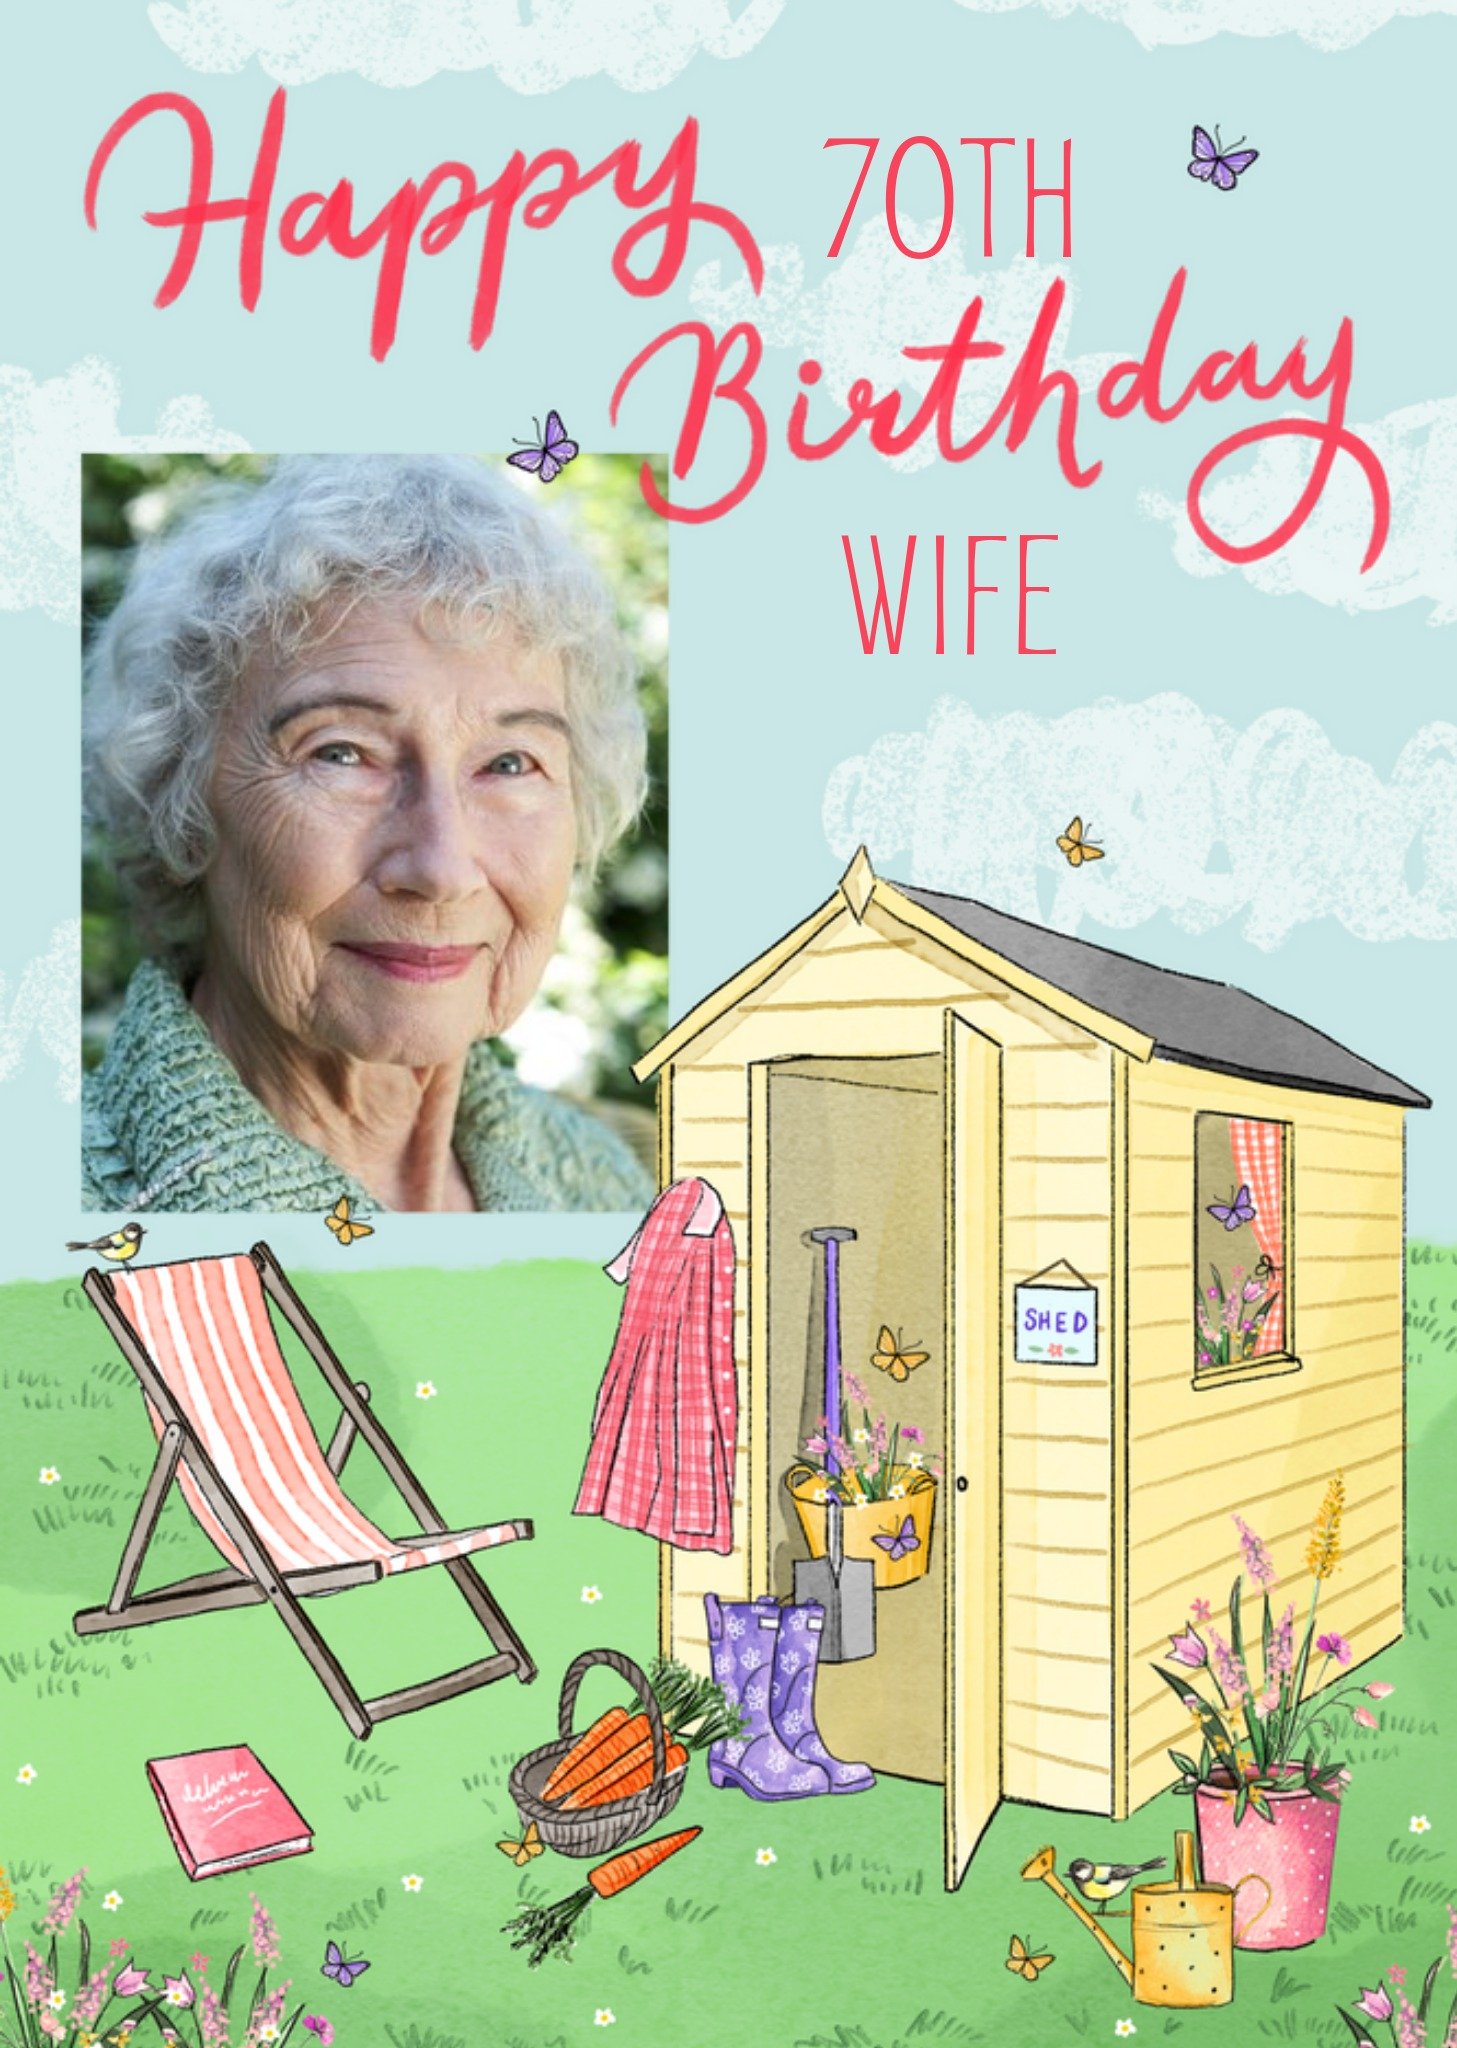 Making Meadows Okey Dokey Illustrated Garden Shed Happy 70th Birthday Wife Photo Upload Card Ecard